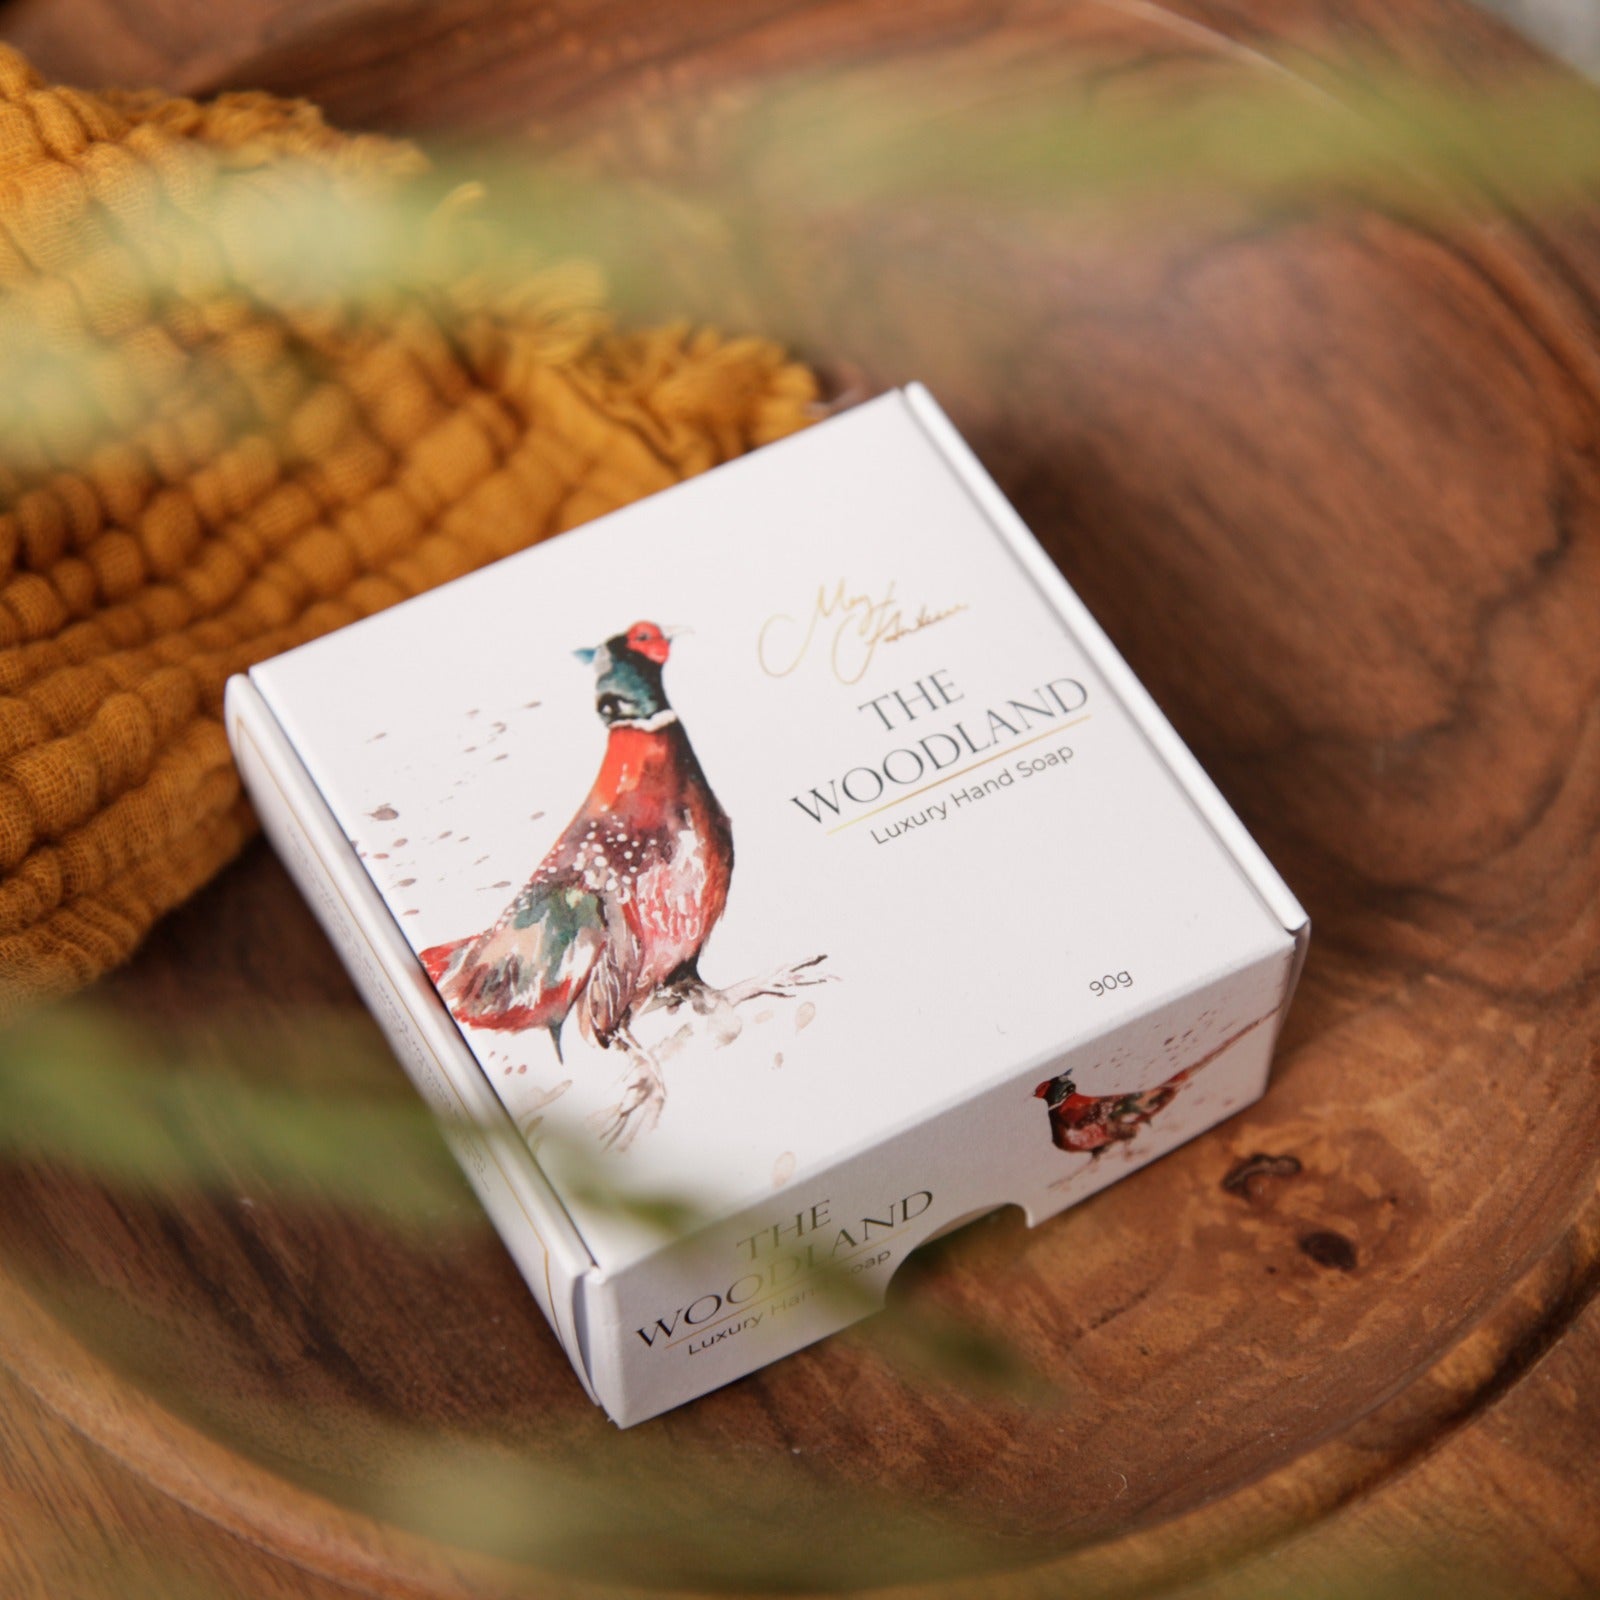 Pheasant Design 'The Woodland' Handmade Hand Soap